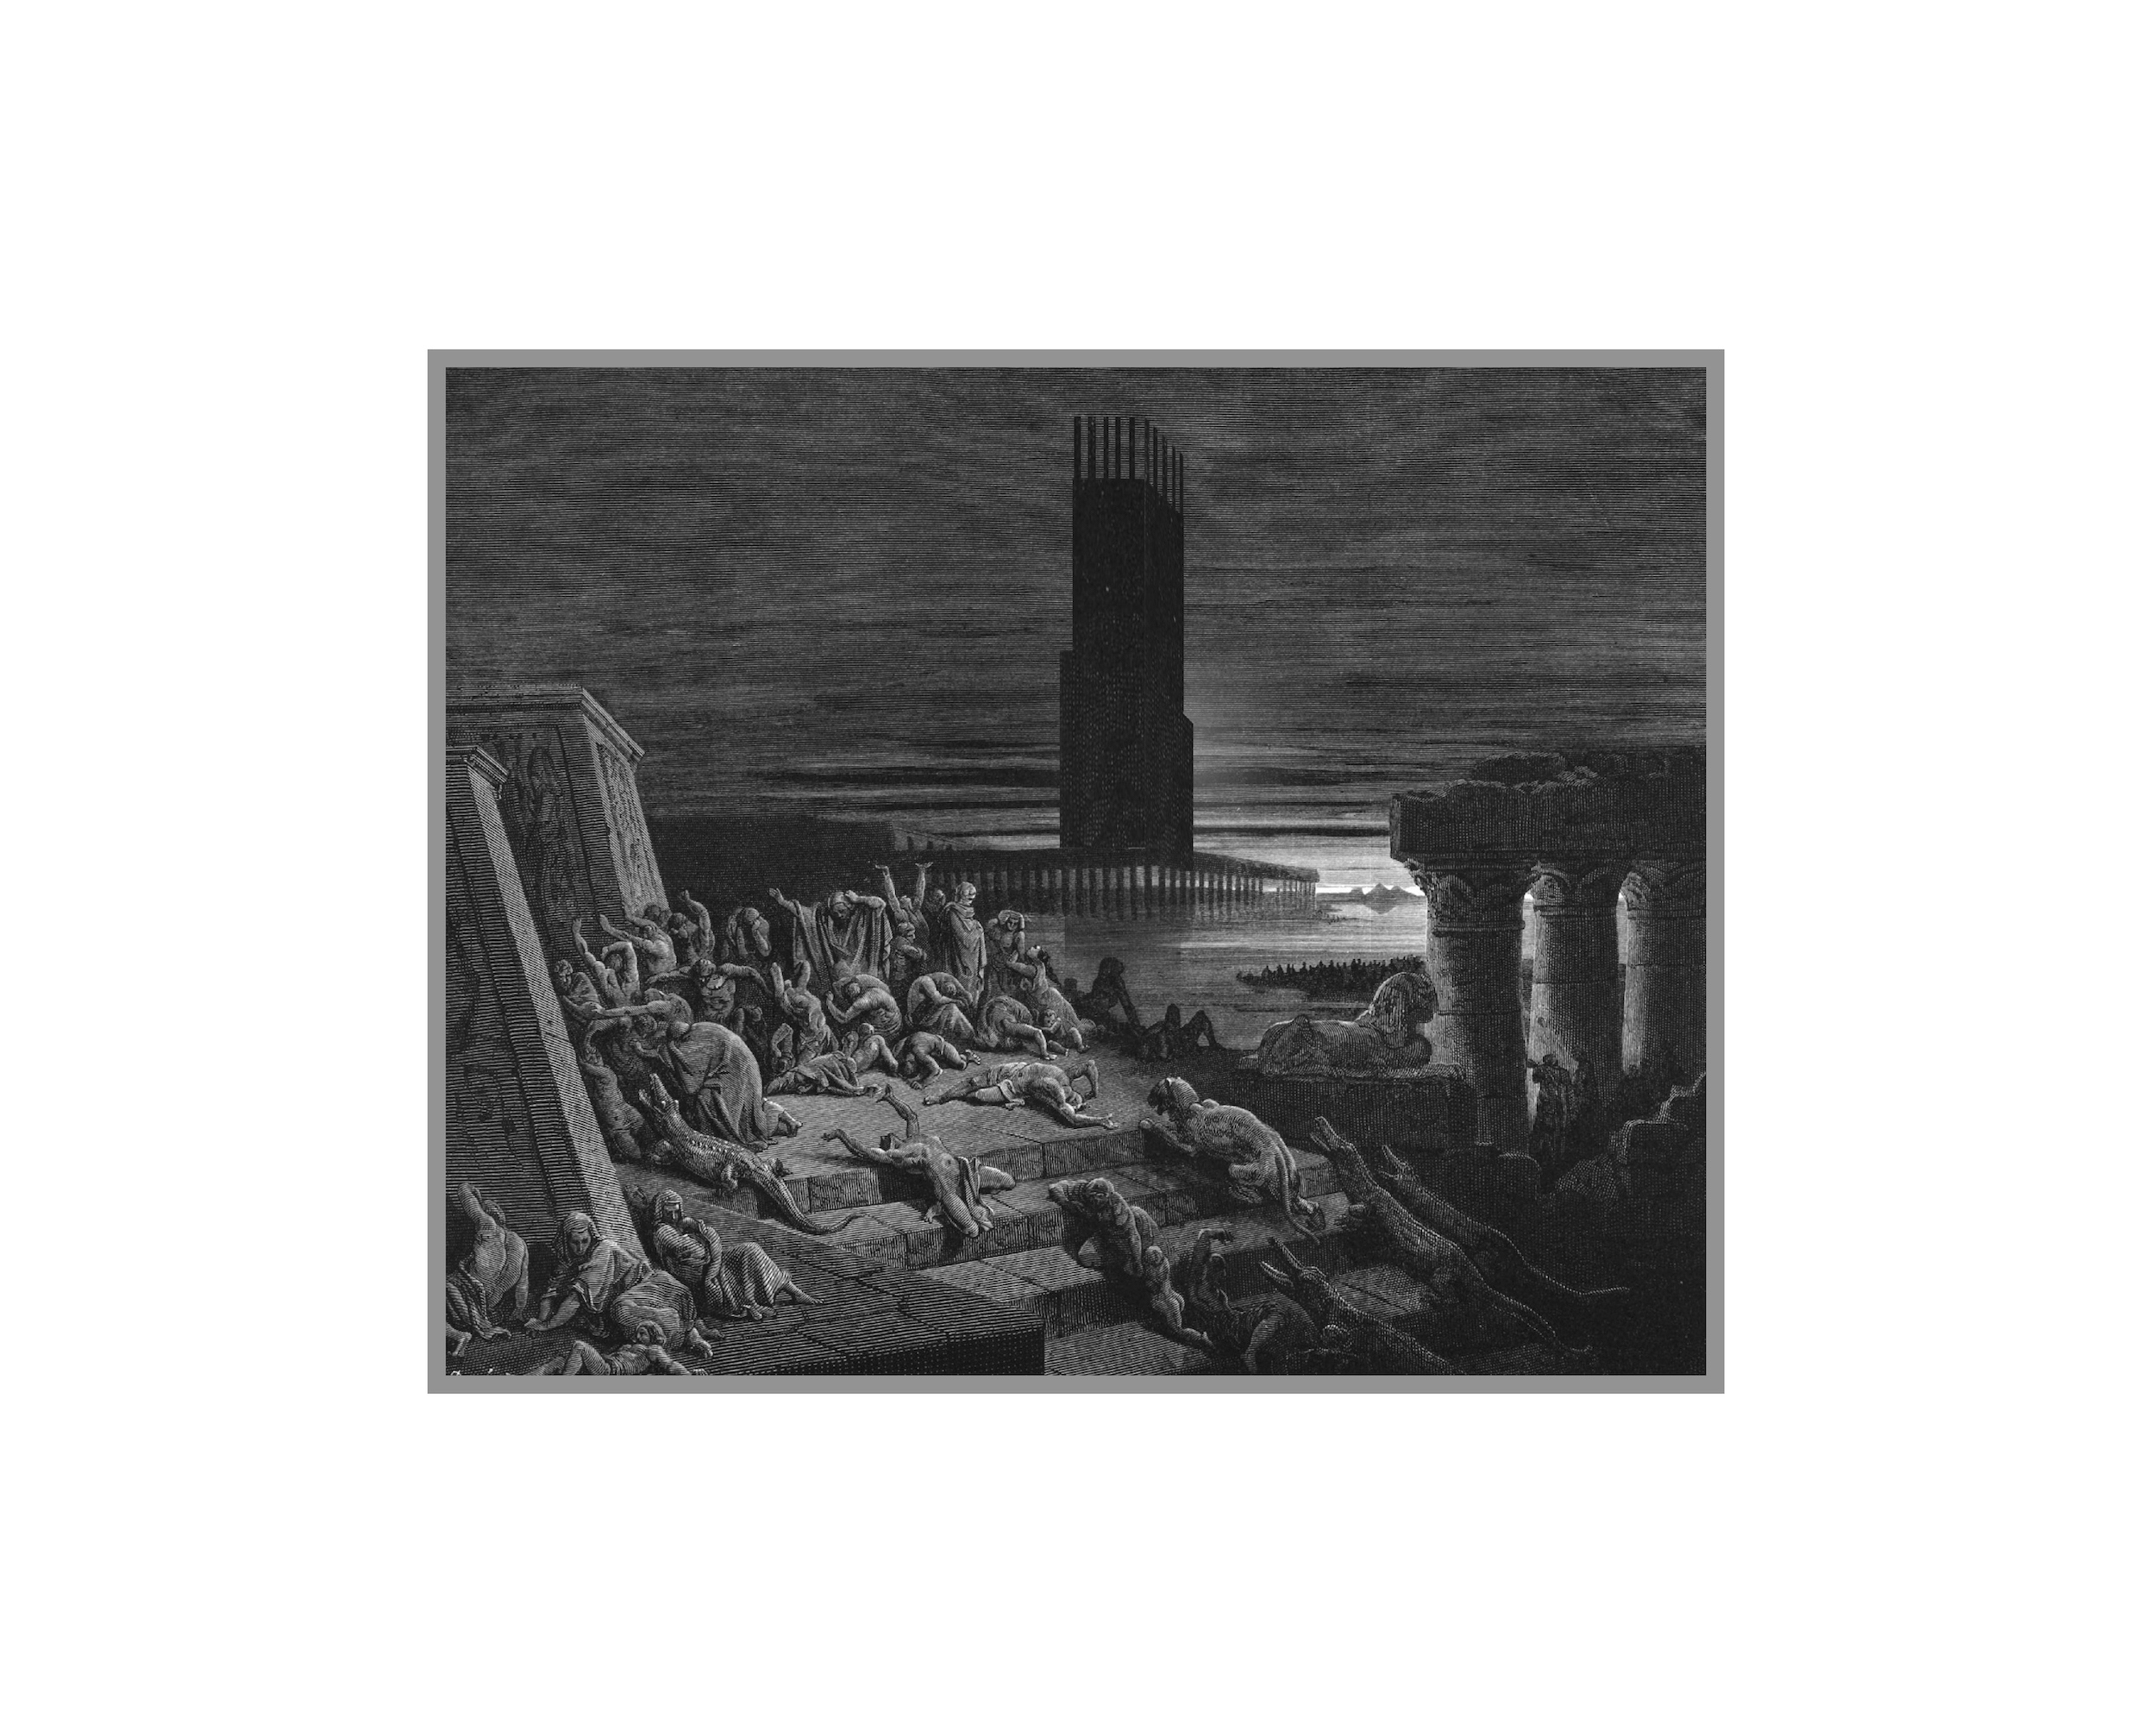 # 3: digitális technika, print; (10x30cm), 2020, e.k.: Dore Gustave - The Plague of Darkness (1832-1883 között)